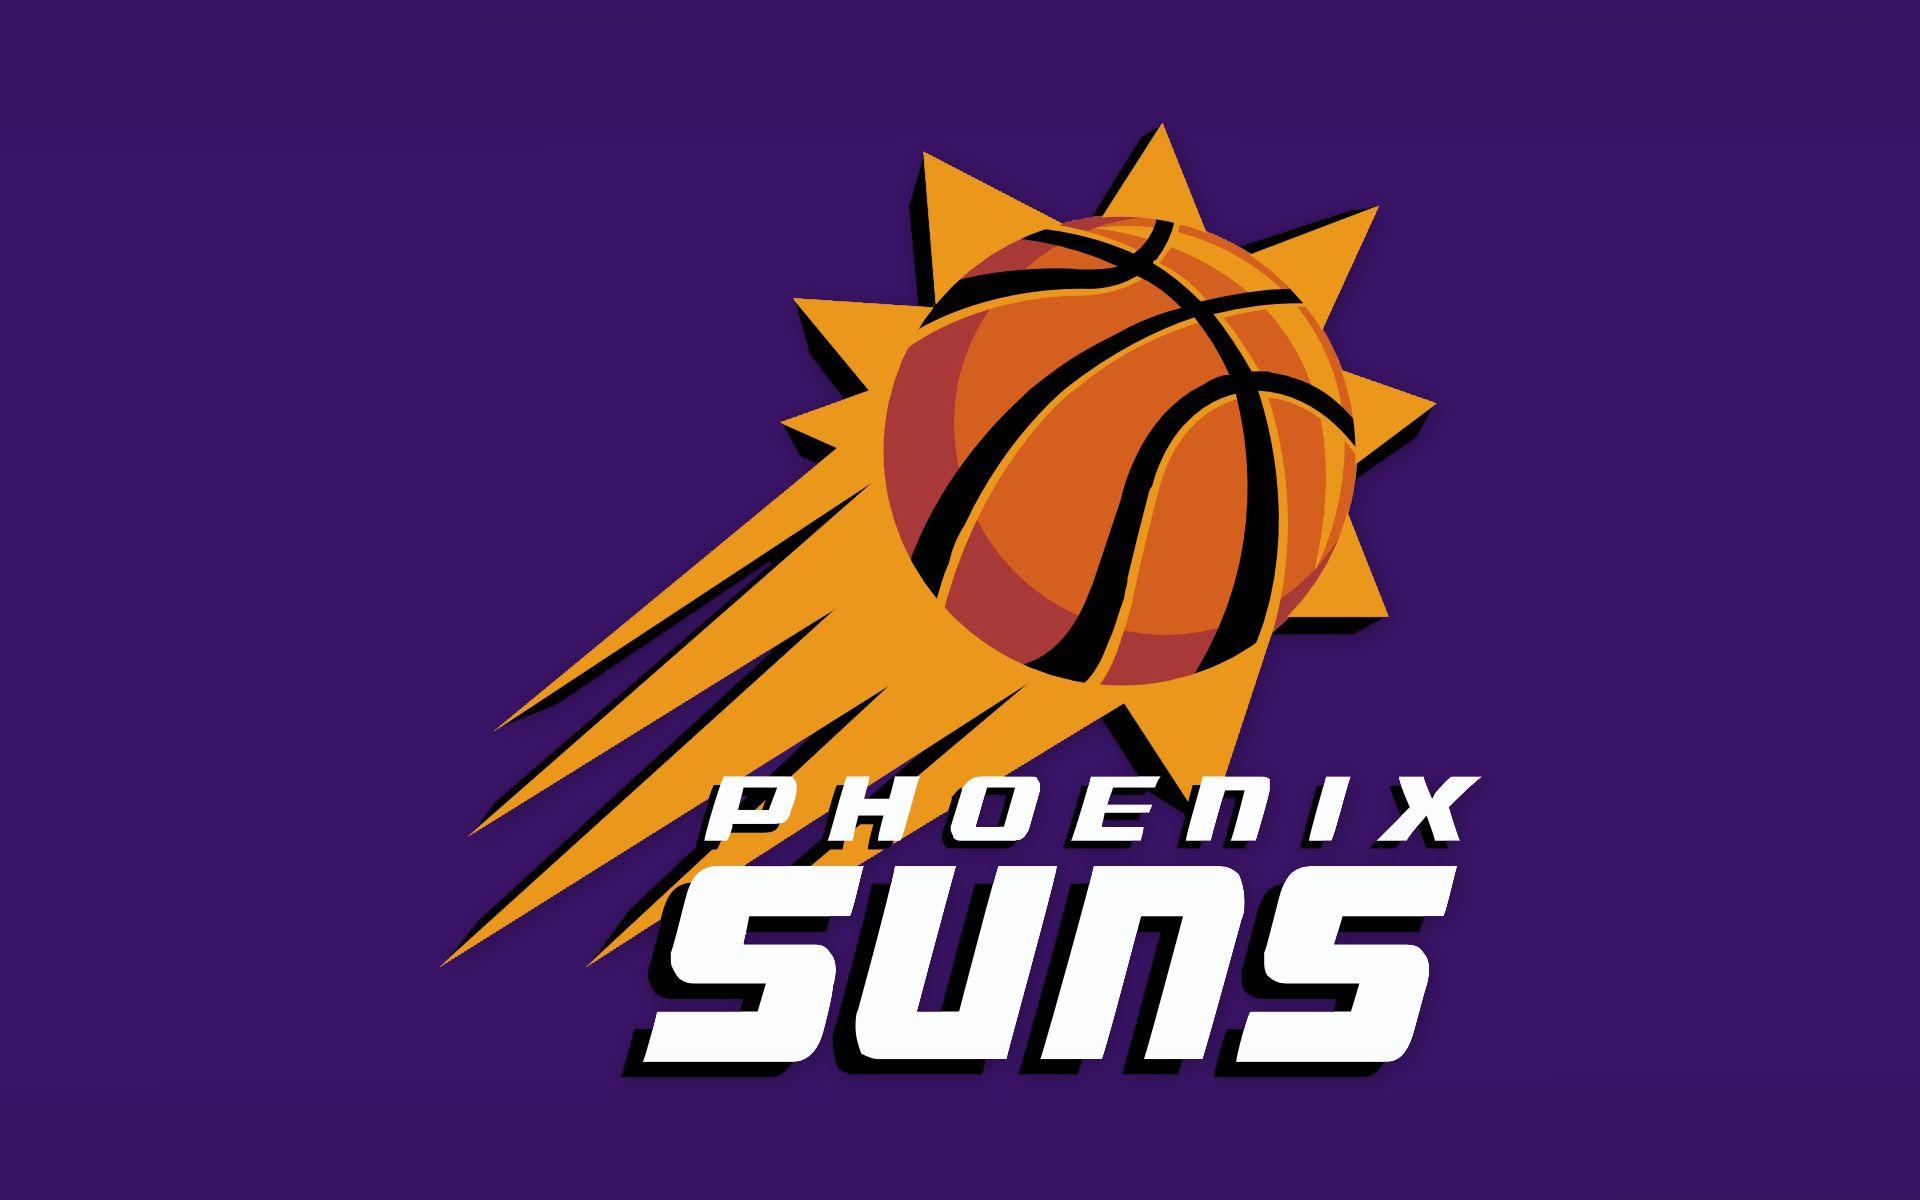 Phoenix Suns leaning towards eetaining Deandre Ayton - Sportando